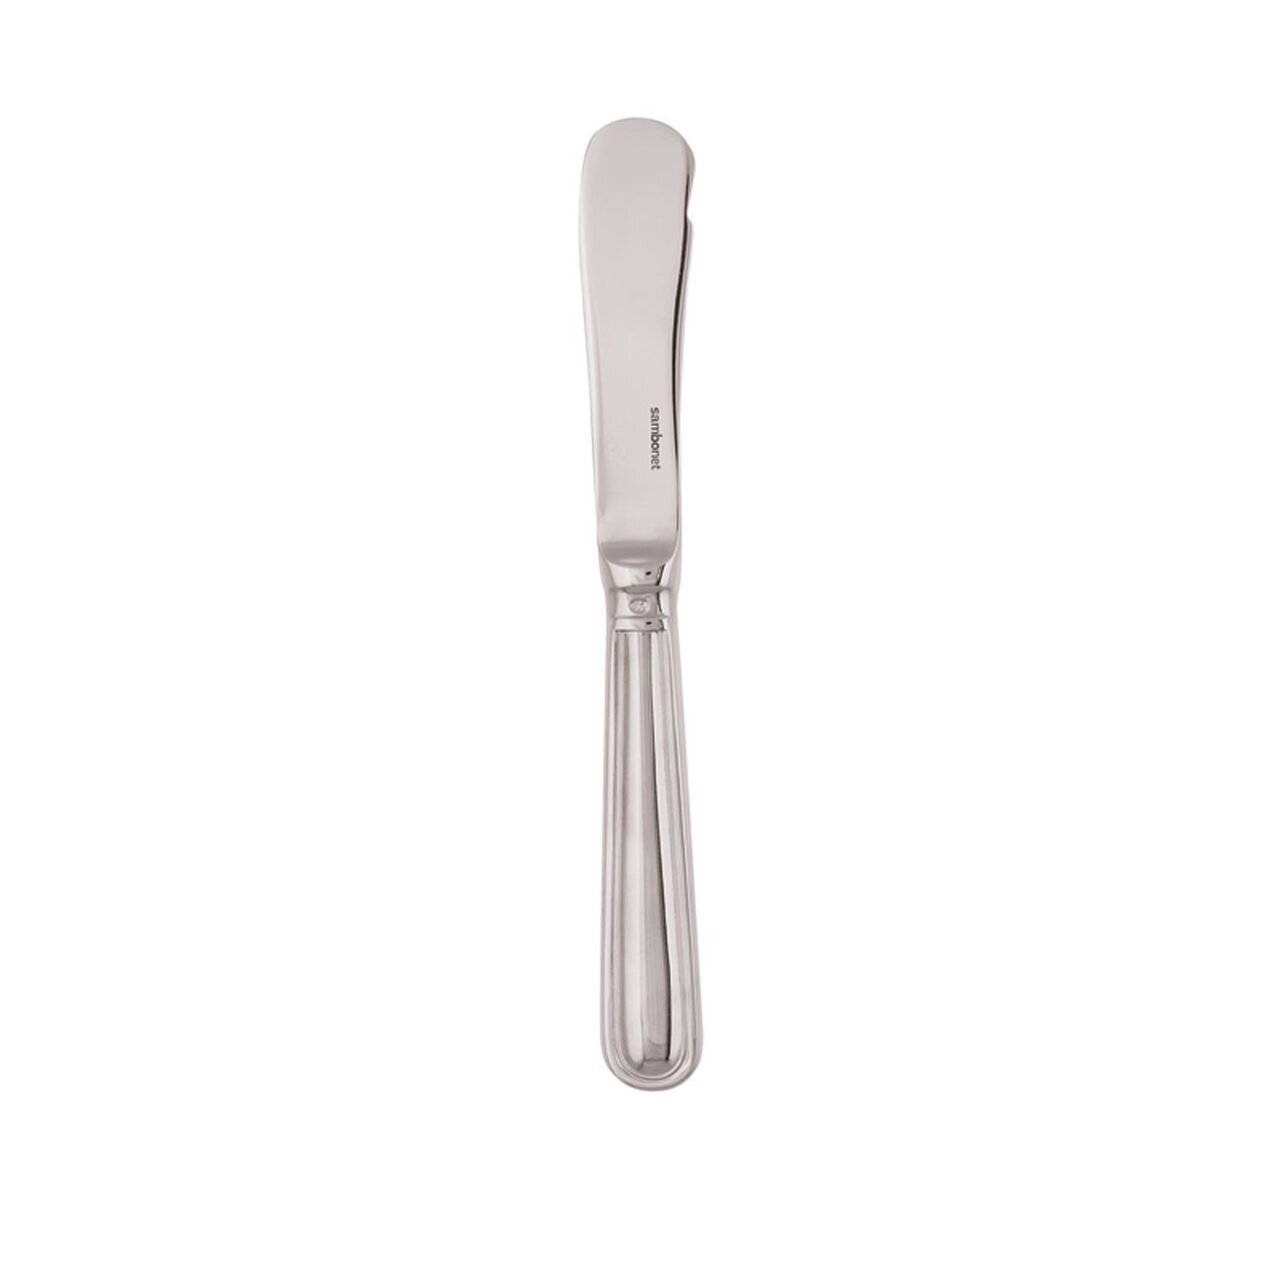 Sambonet Contour Butter Knife Solid Handle 52501-73